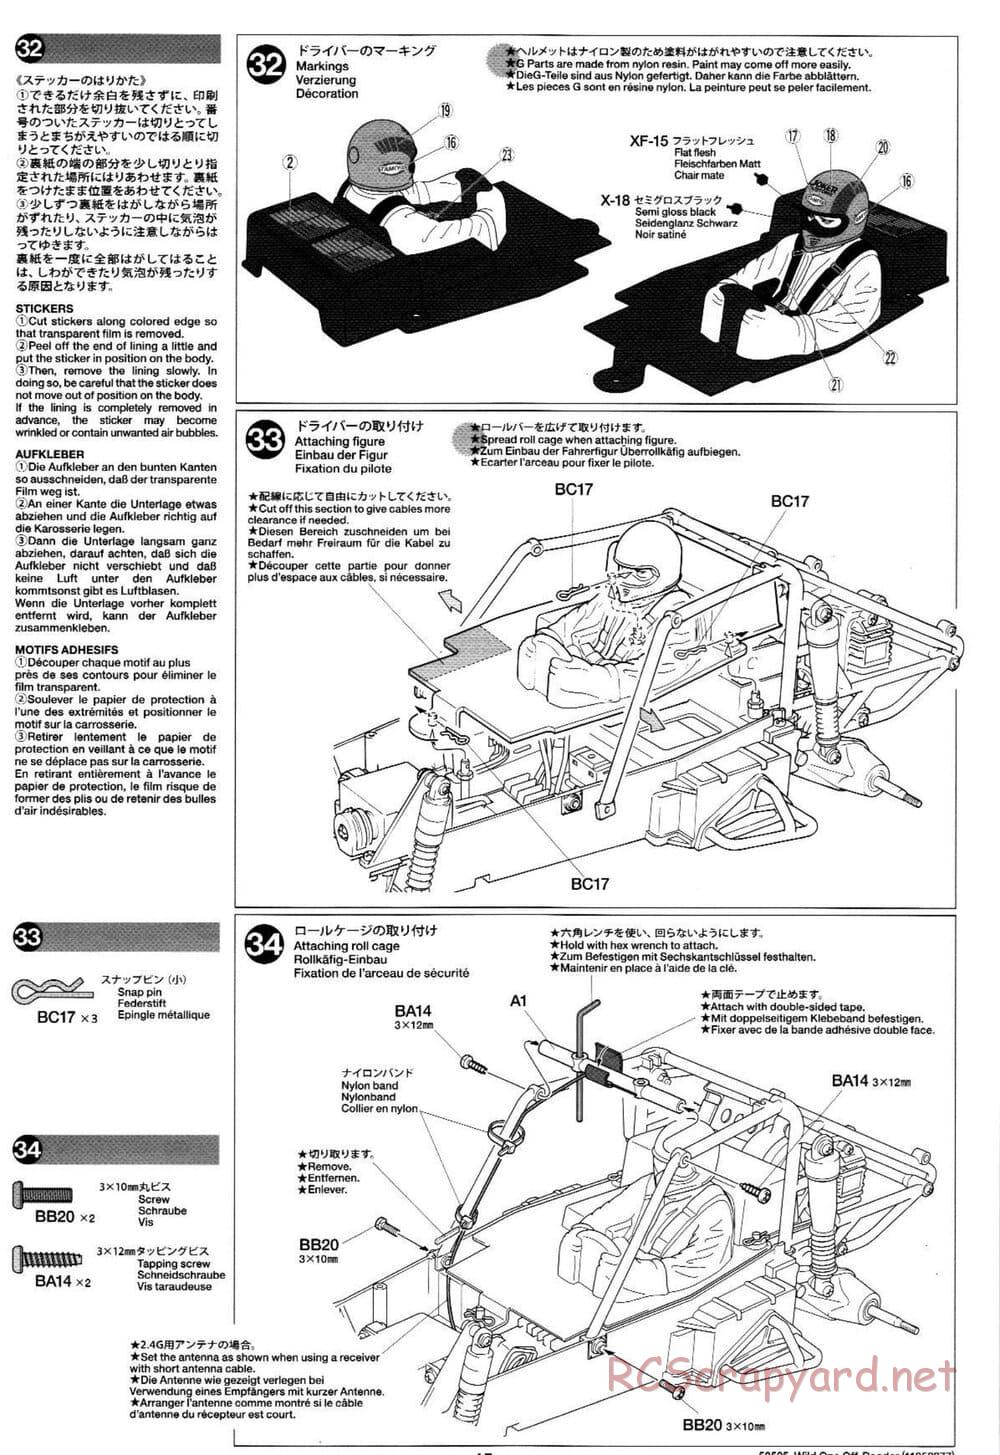 Tamiya - Wild One Off-Roader - FAV Chassis - Manual - Page 15